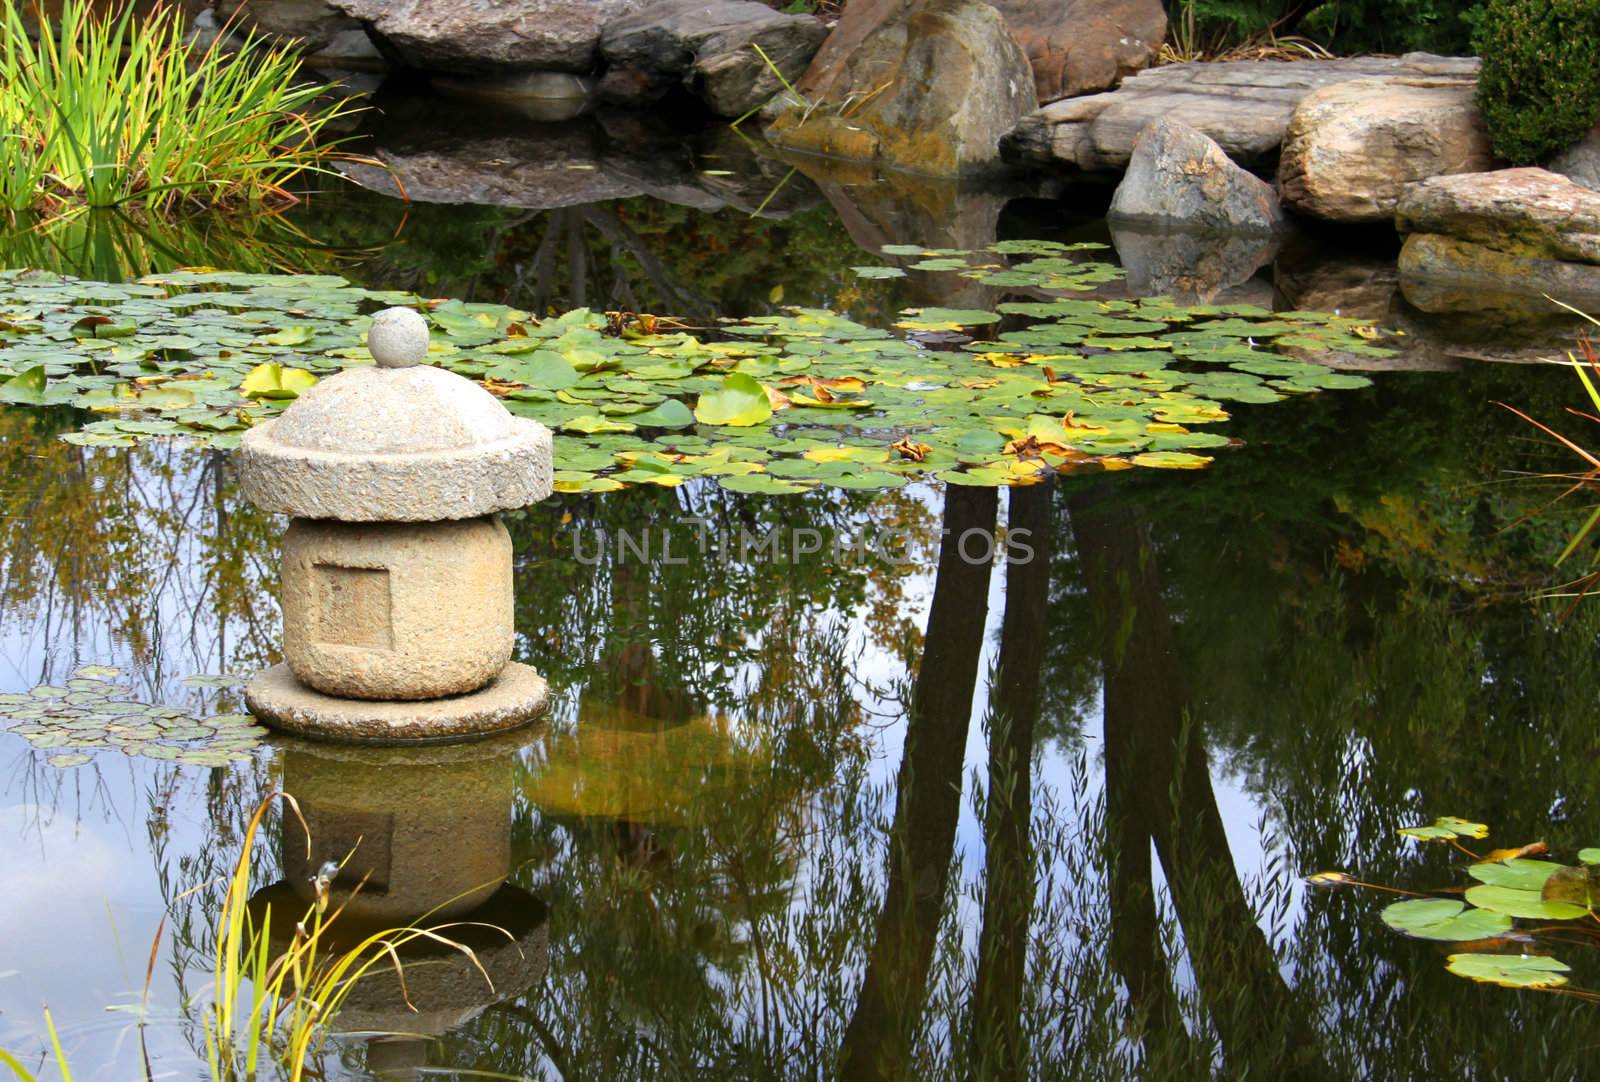 S'ensui - Japanese Water Garden based on Shin with Water-viewing Lantern